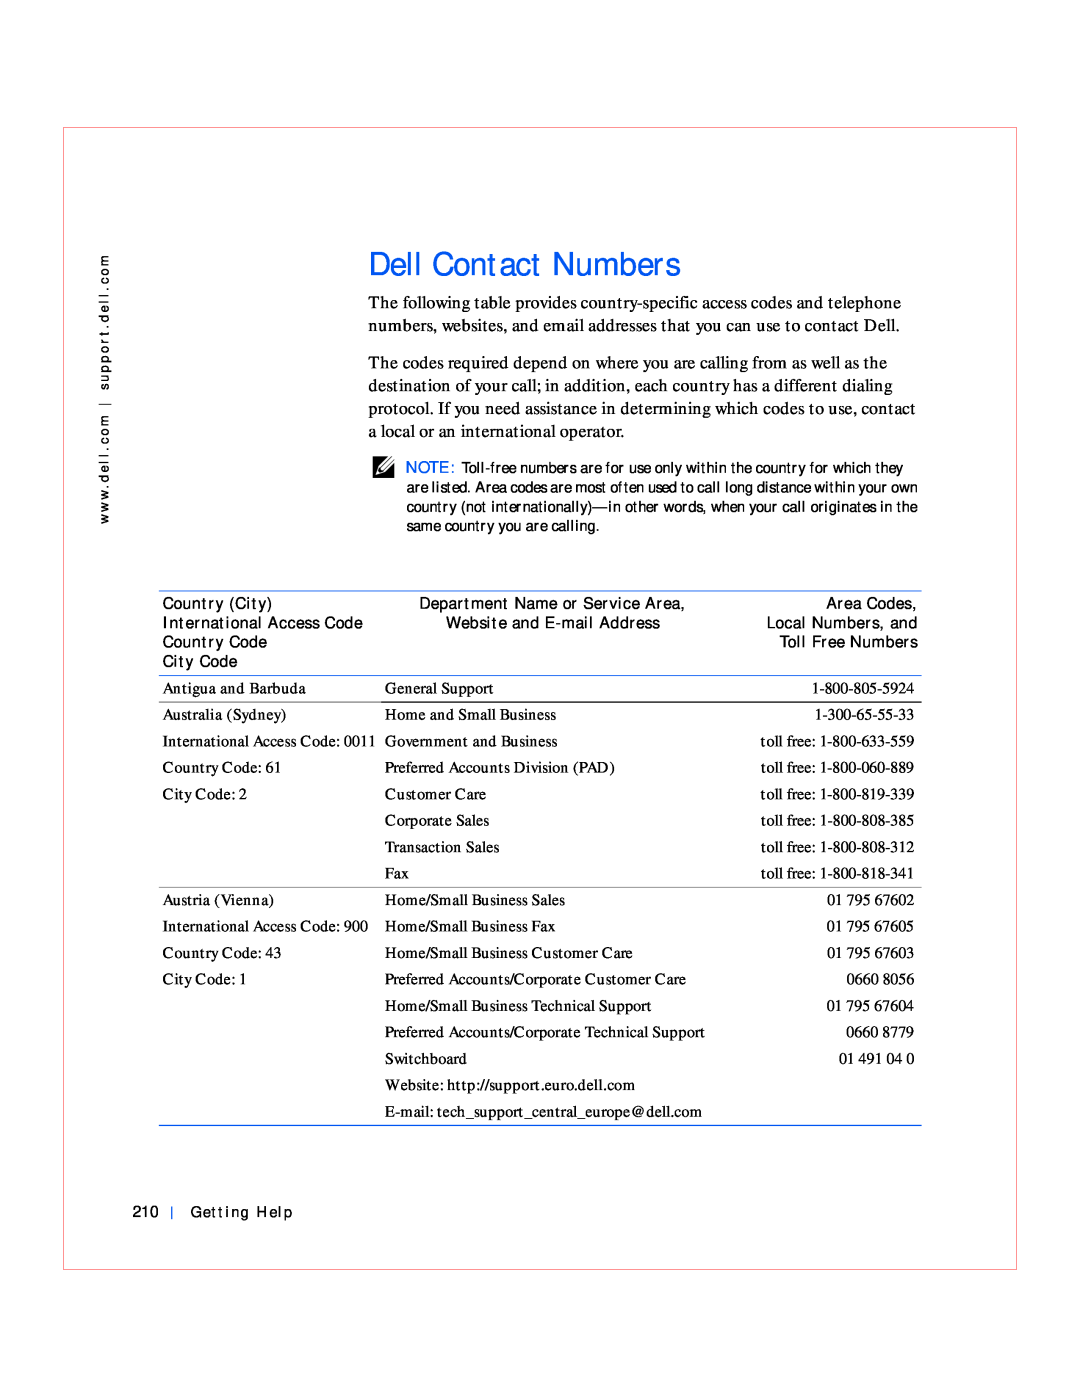 Dell GX240 manual Dell Contact Numbers, Antigua and Barbuda, Australia Sydney, Austria Vienna 